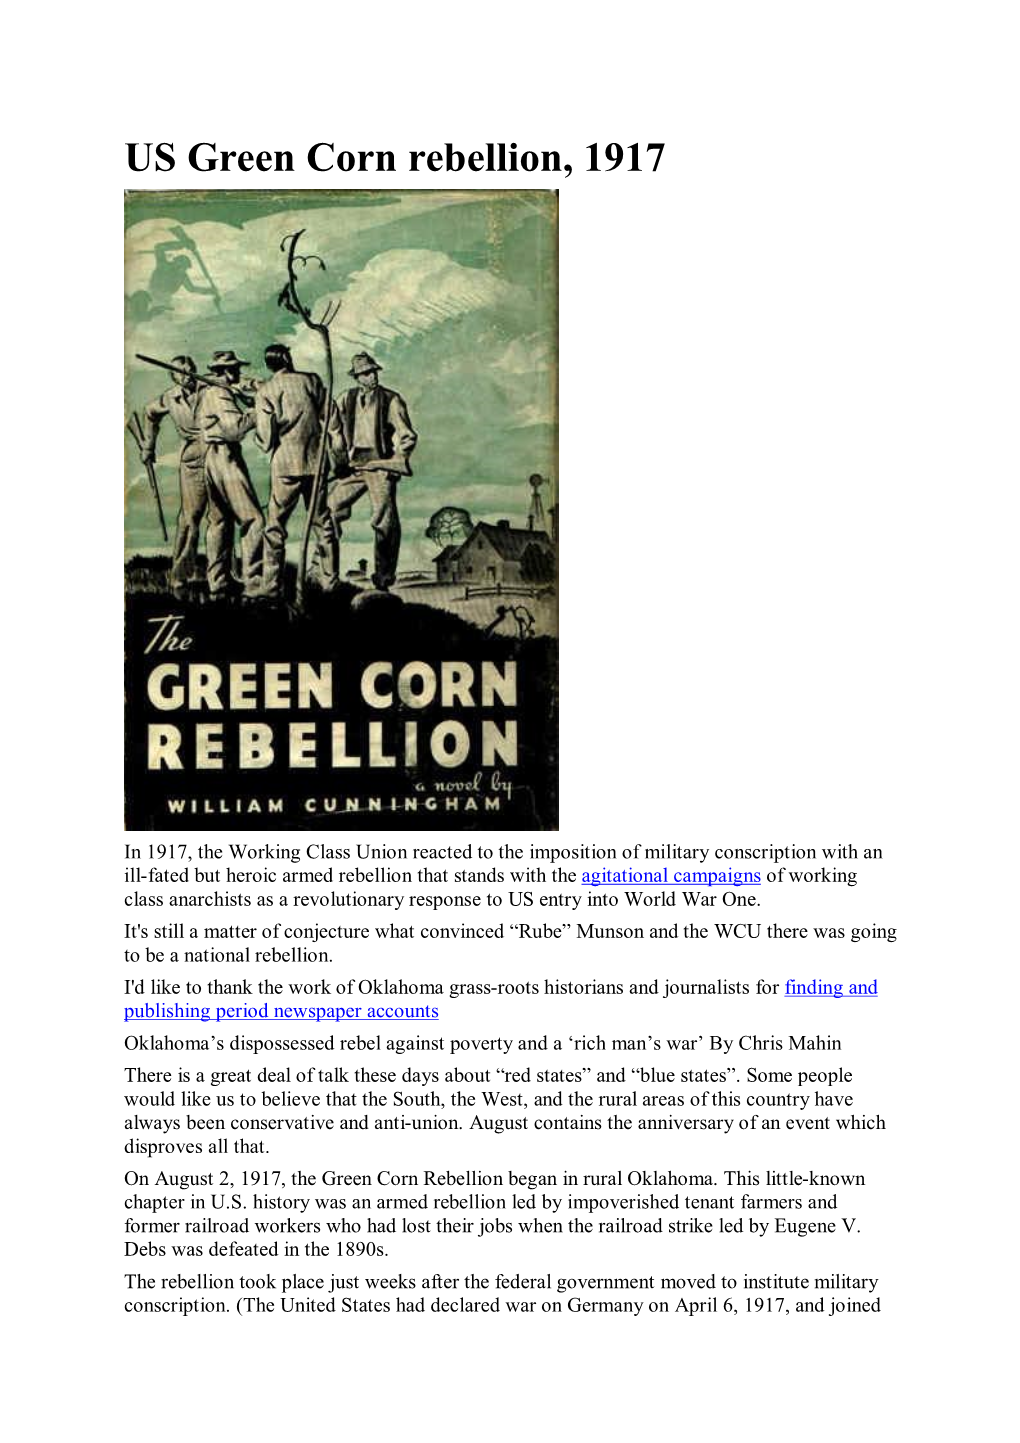 US Green Corn Rebellion, 1917